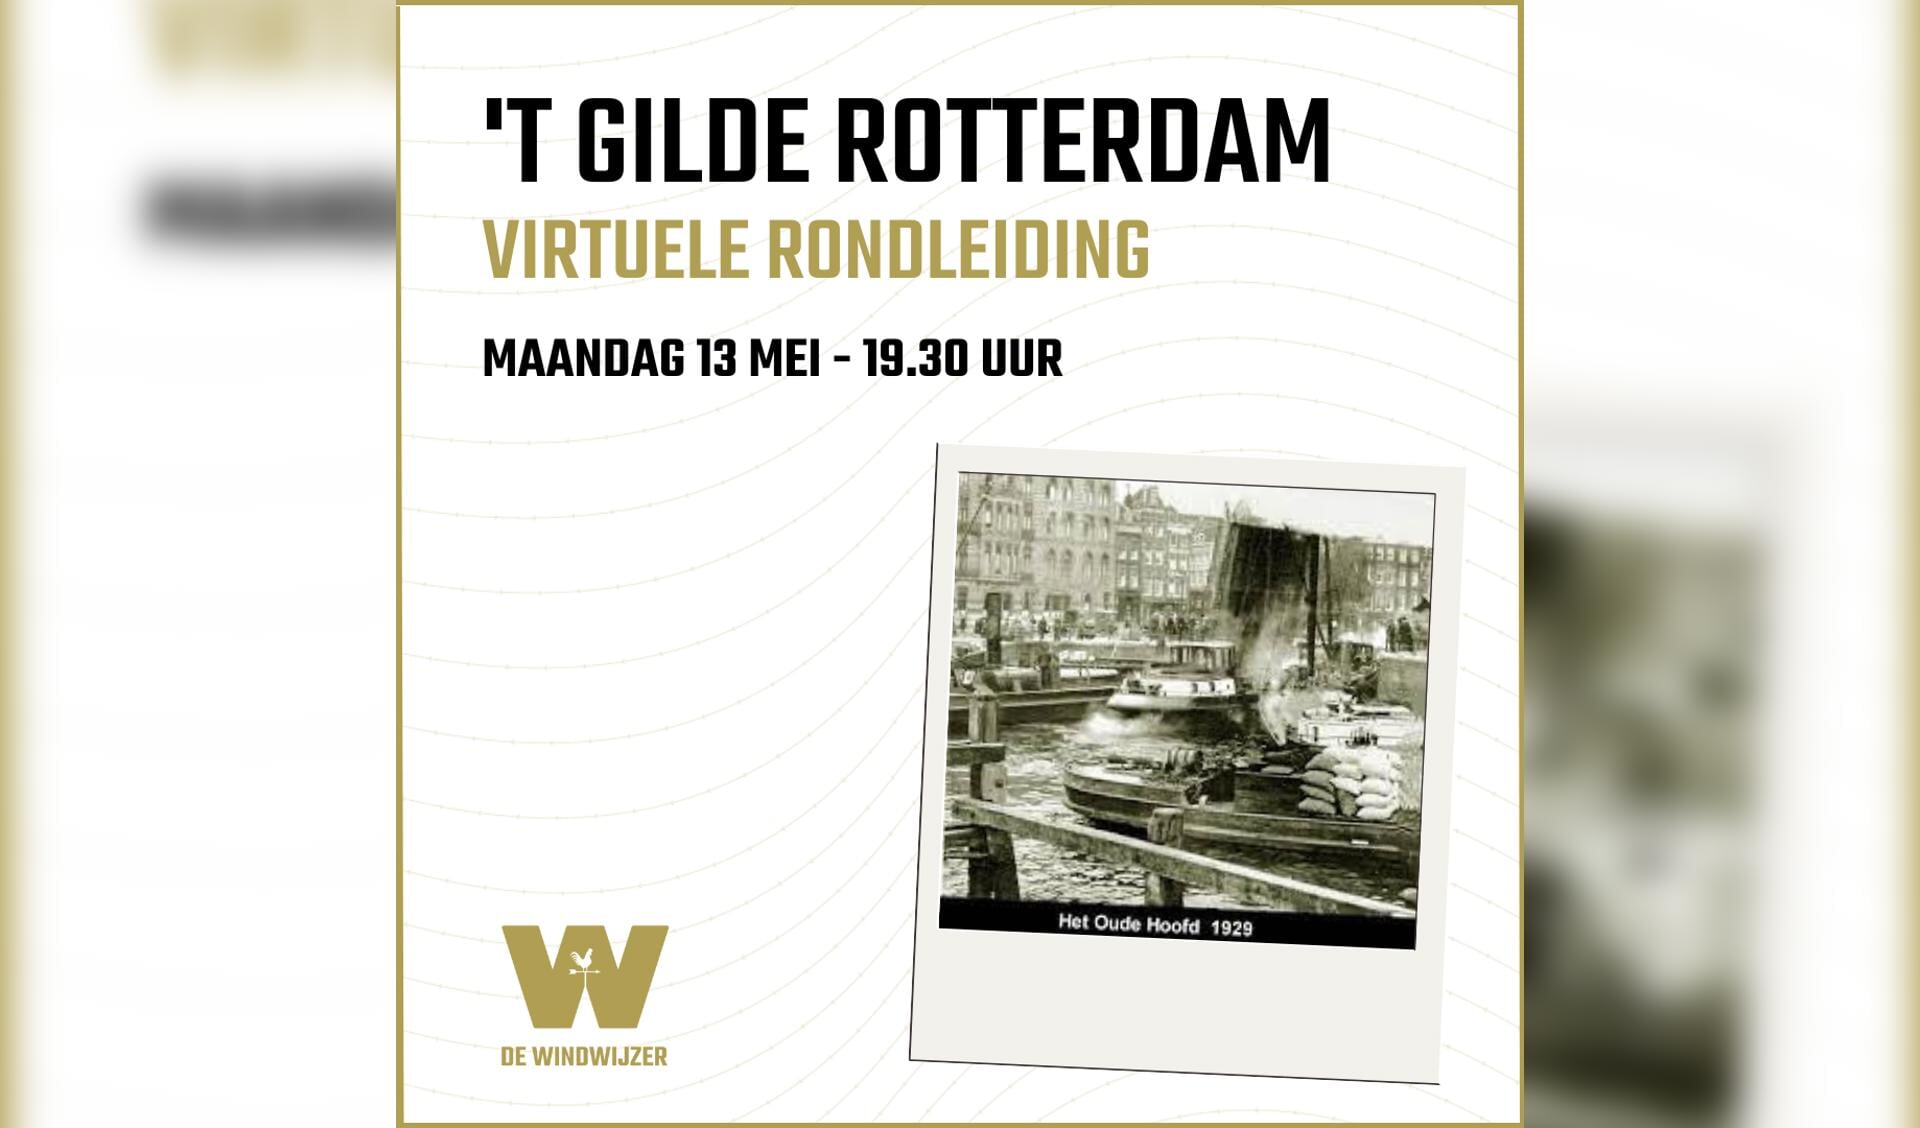 Virtuele rondleiding ‘t Gilde Rotterdam